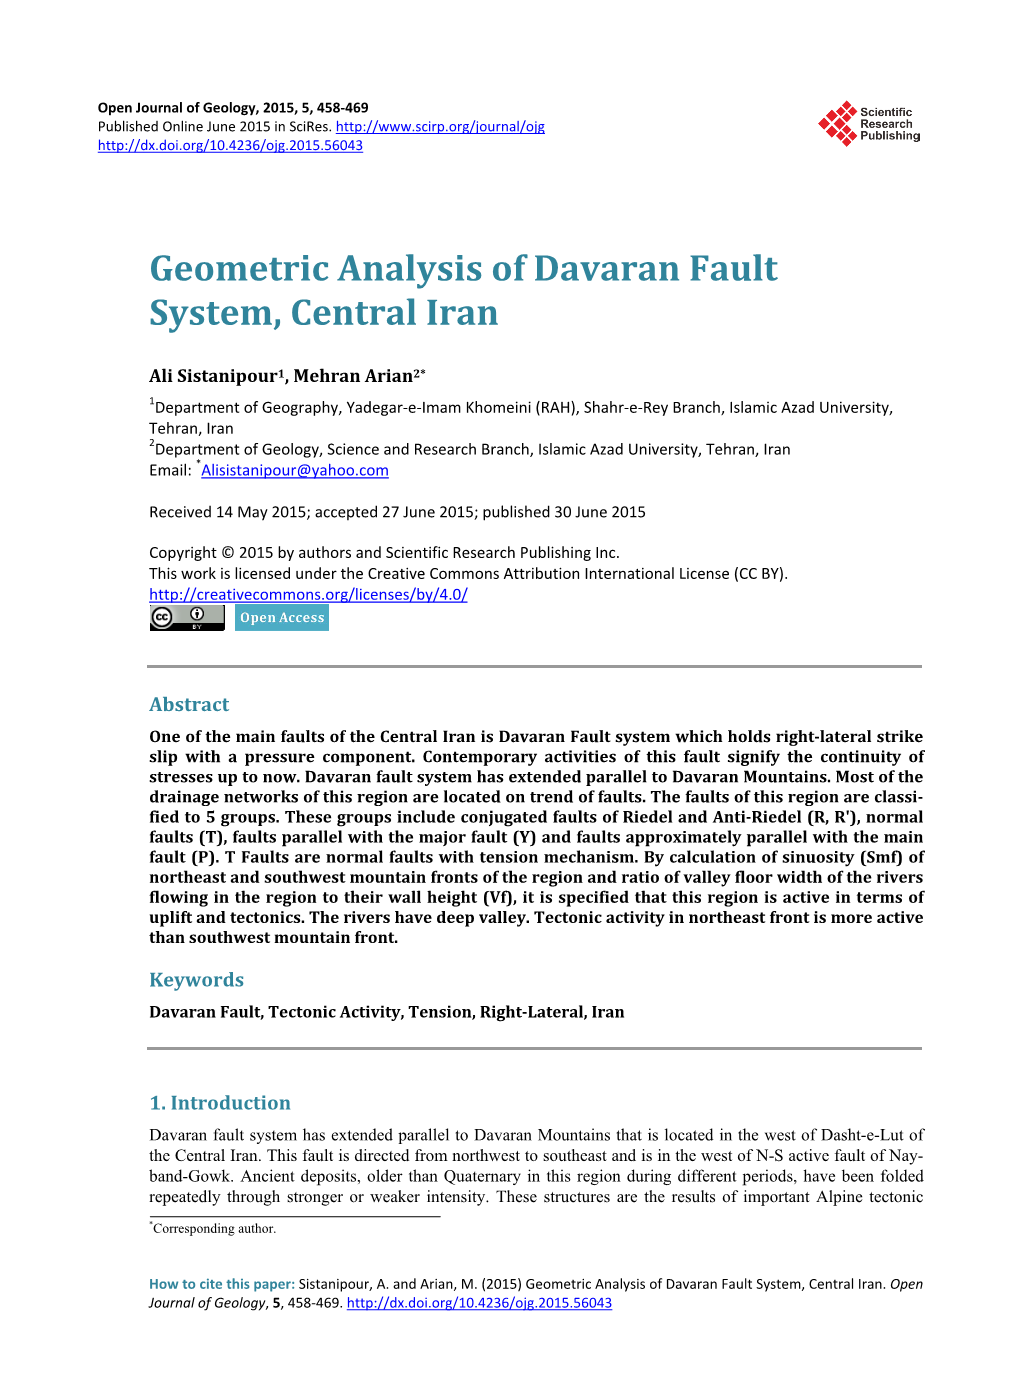 Geometric Analysis of Davaran Fault System, Central Iran